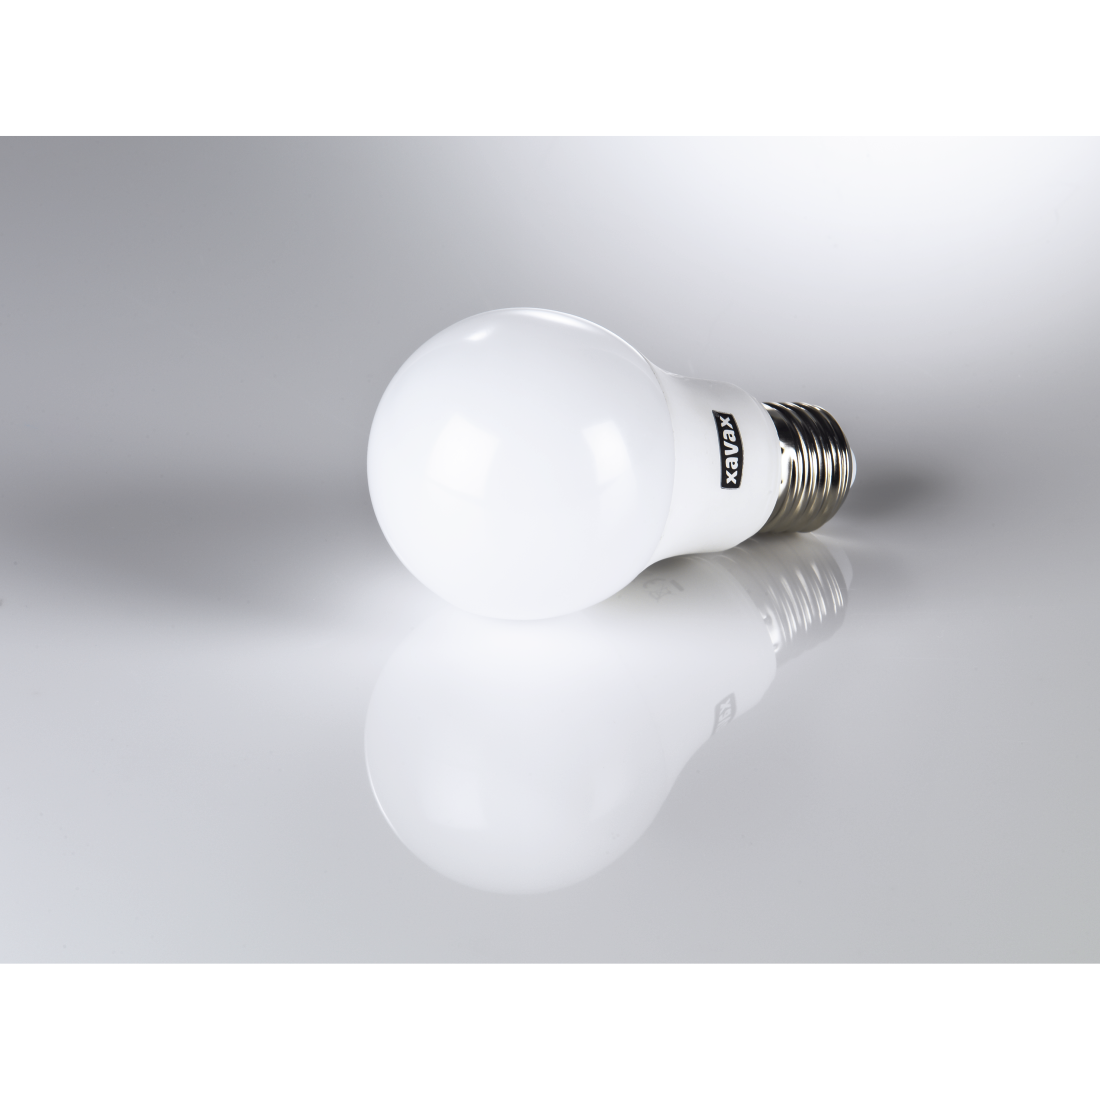 abx3 Druckfähige Abbildung 3 - Xavax, LED-Lampe, E27, 806lm ersetzt 60W, Glühlampe, Warmweiß